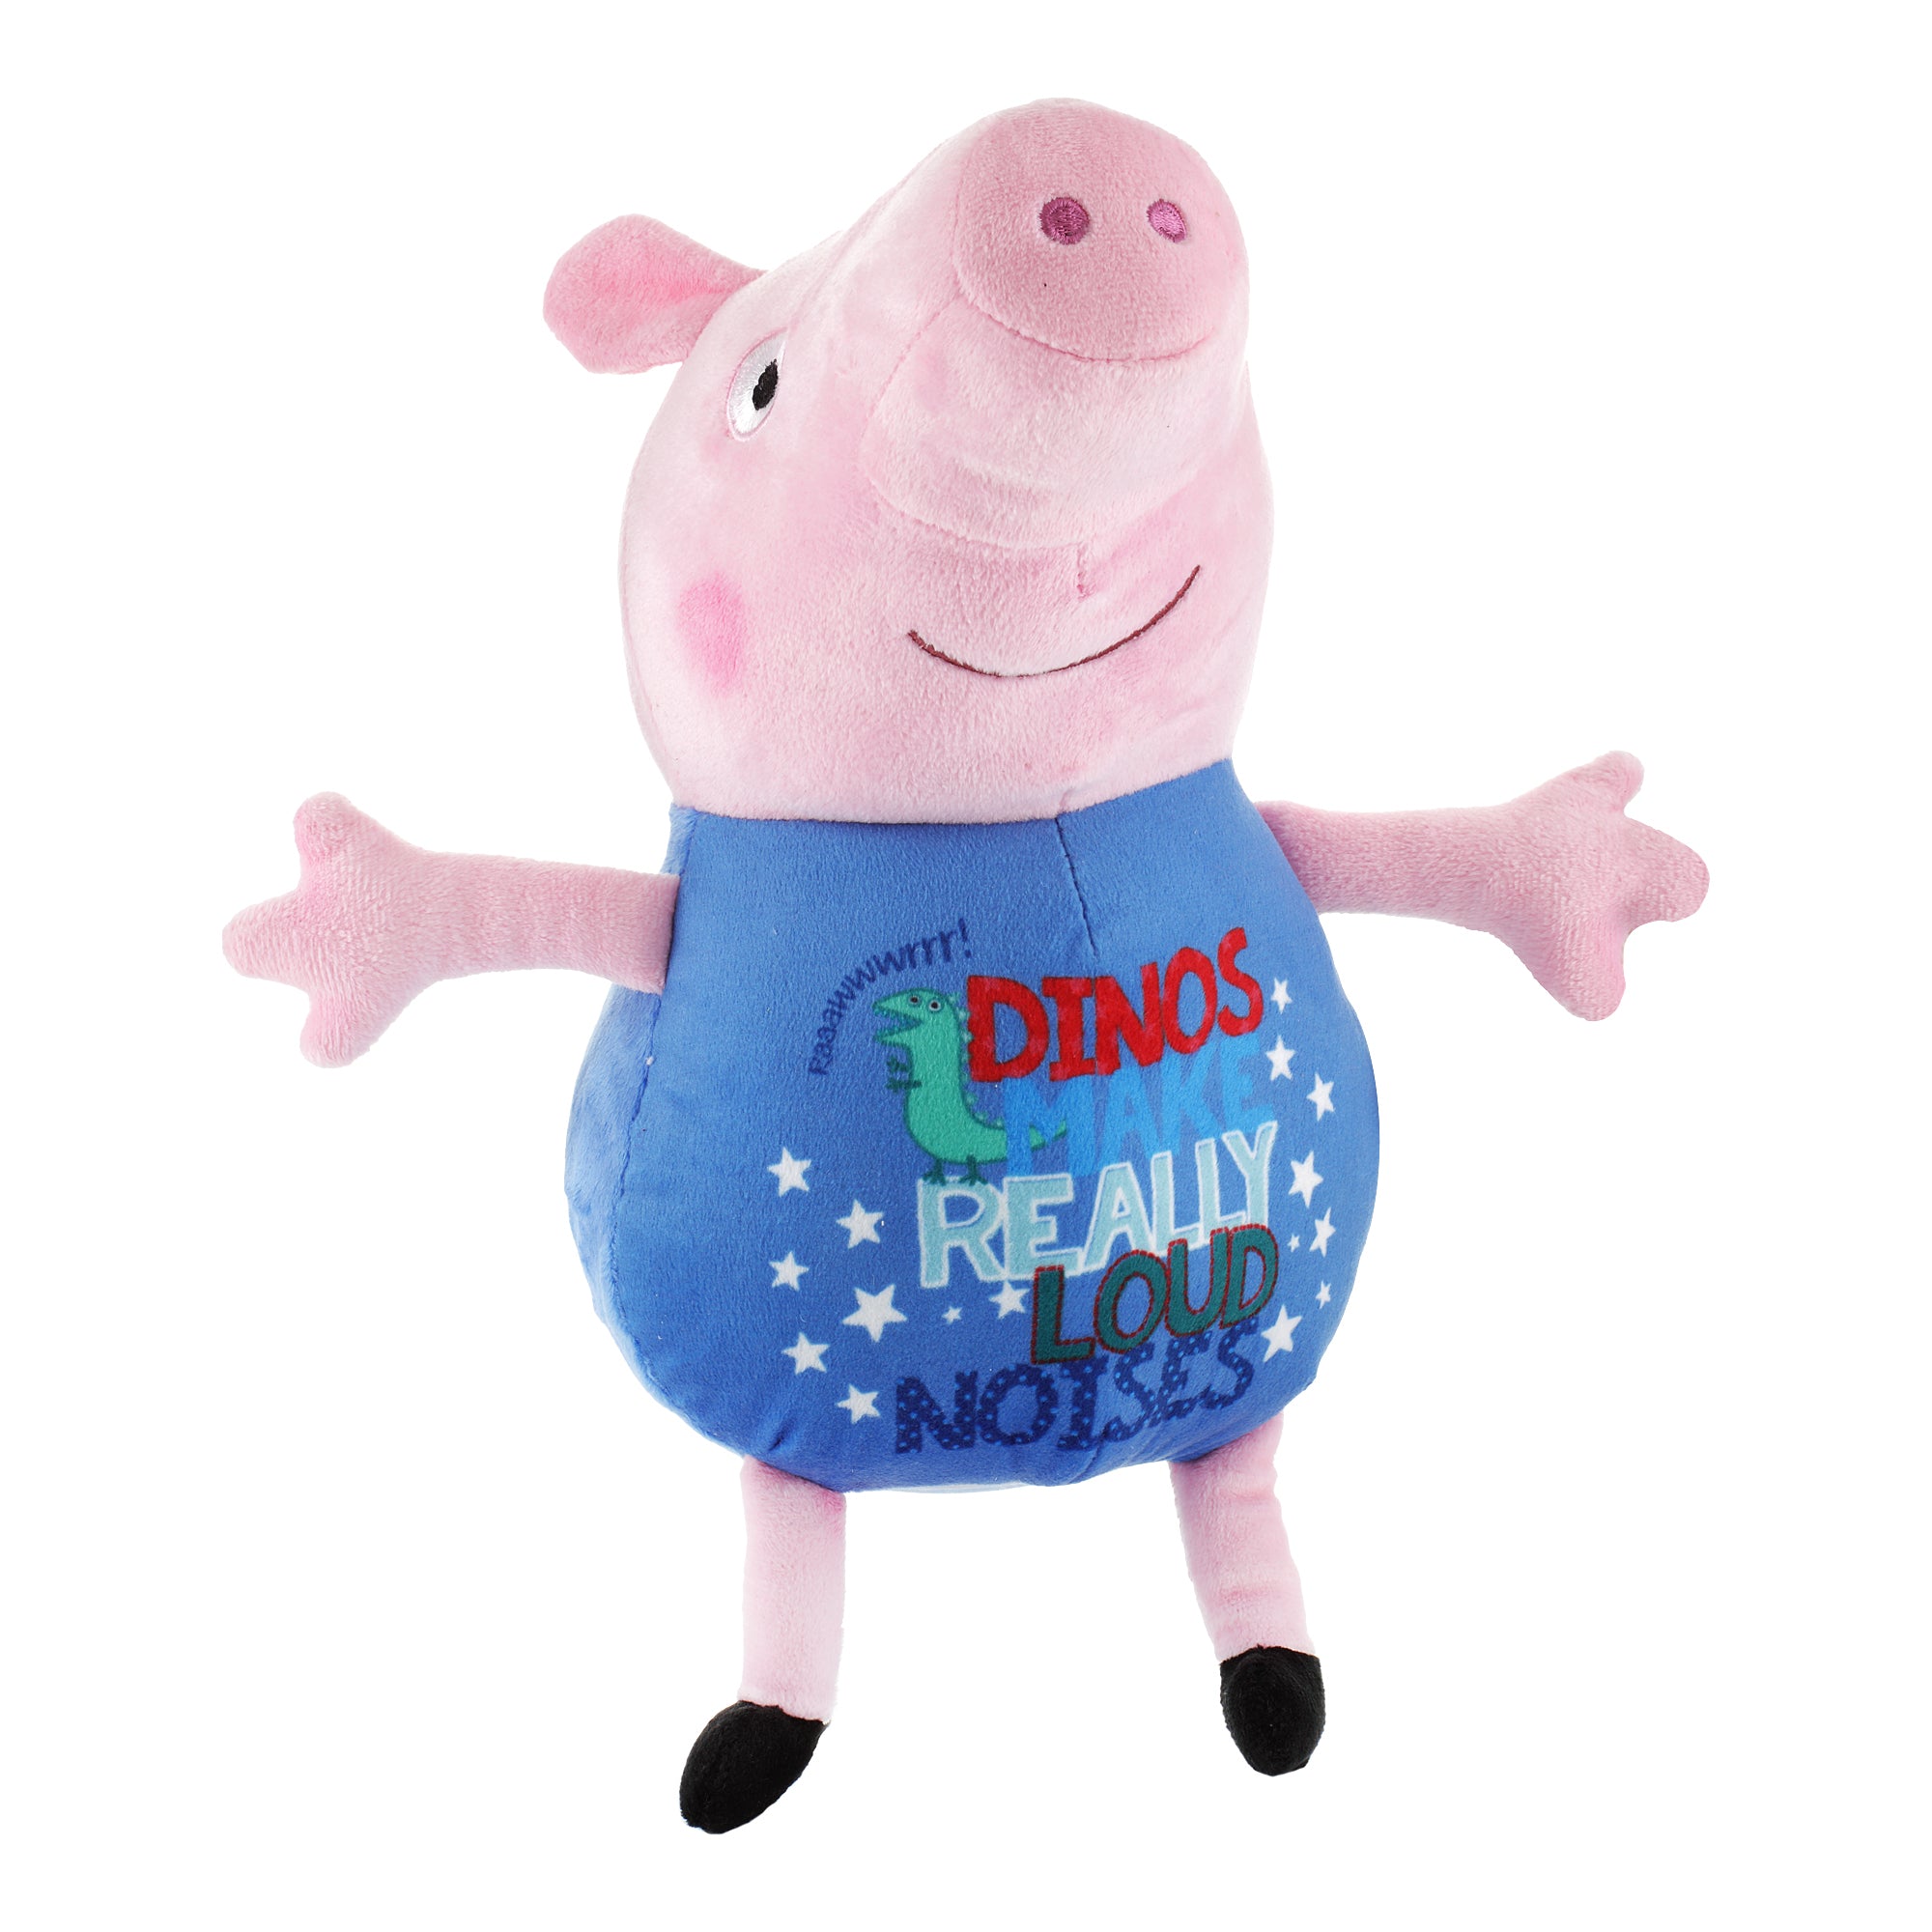 Peppa Pig George Dinos Soft Plush Toy 12